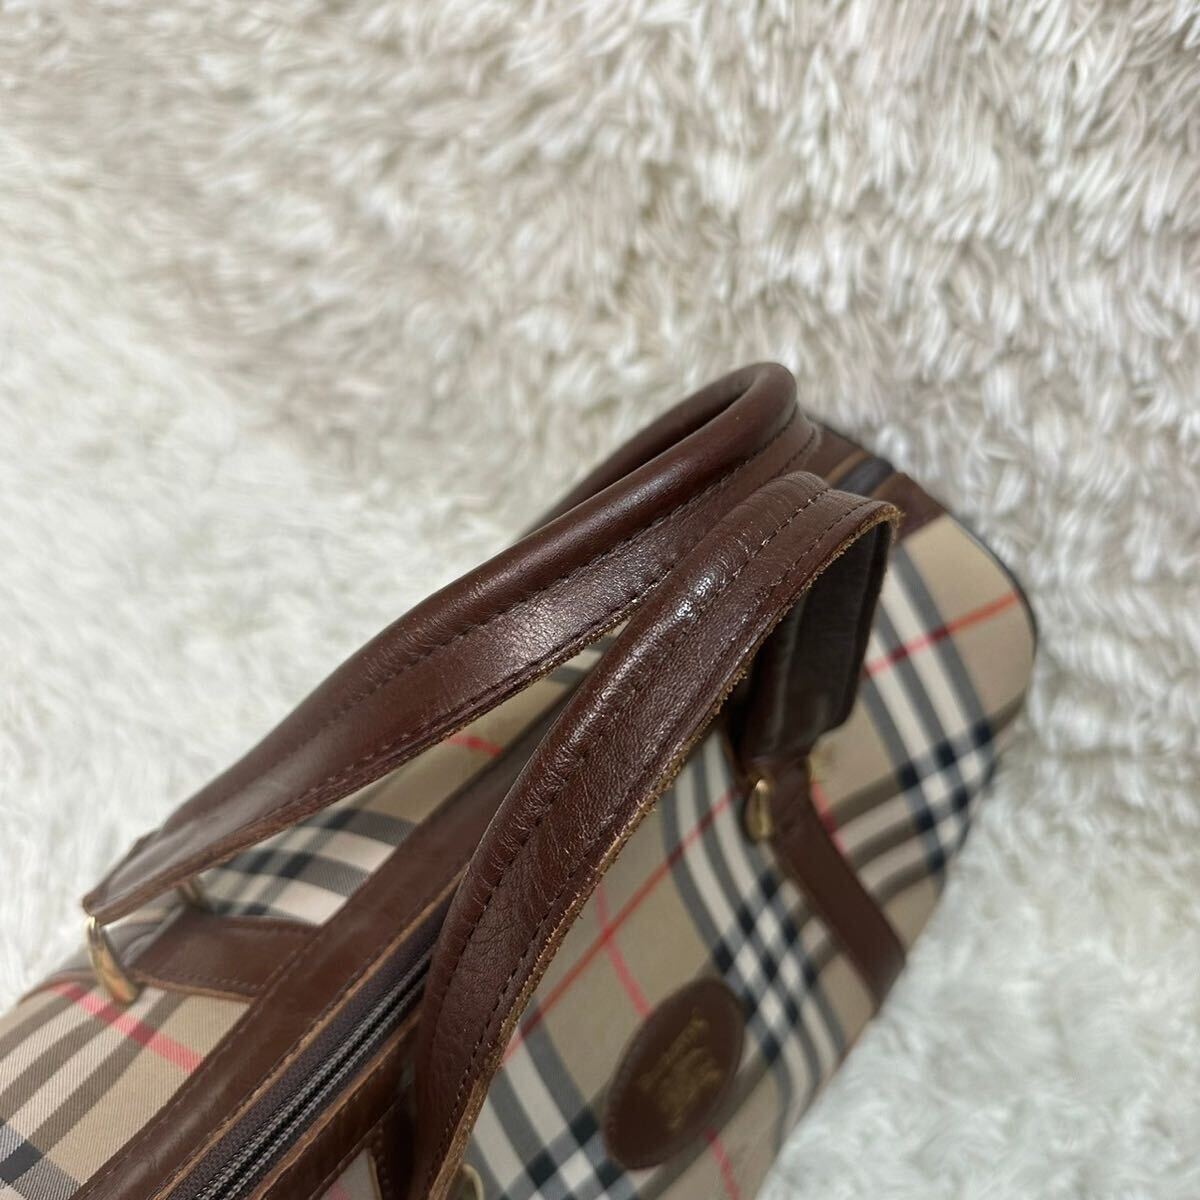  Burberry [ популярный дизайн ]Burberrys сумка "Boston bag" ручная сумочка noba проверка Shadow шланг кожа BURBERRY Burberry z